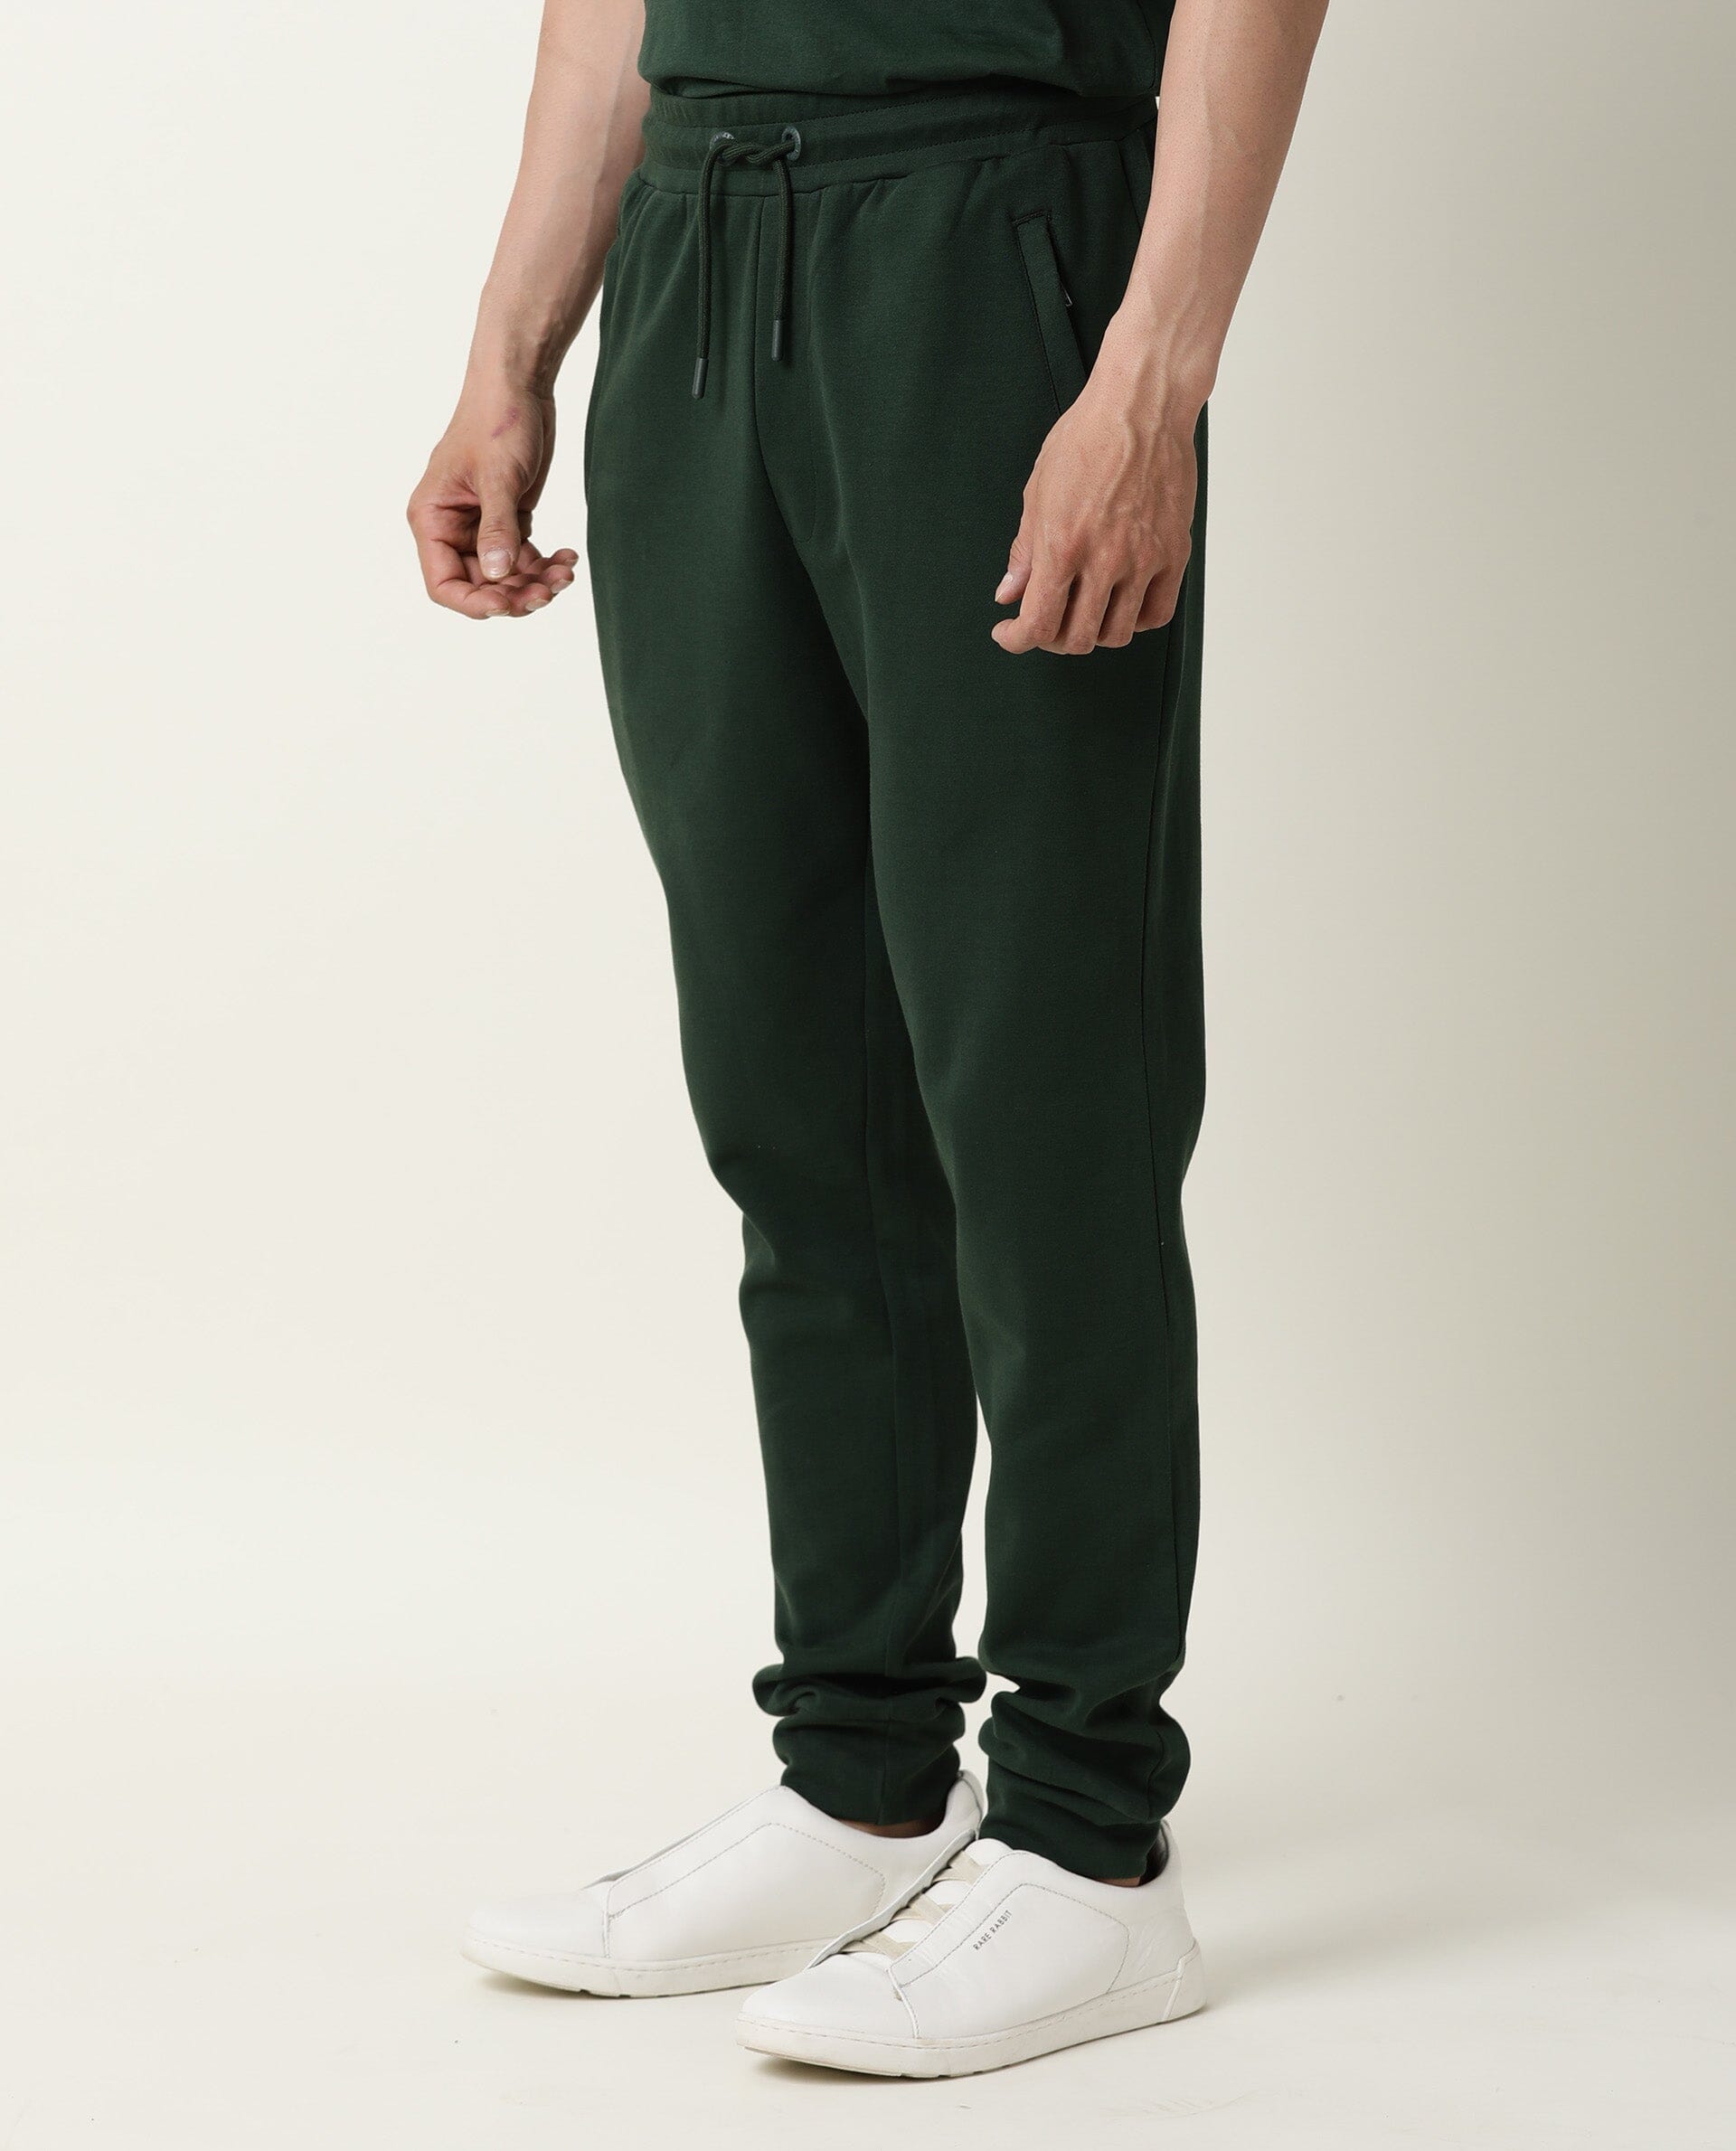 Buy CELIO Green Solid Cotton Regular Fit Men's Track Pants | Shoppers Stop